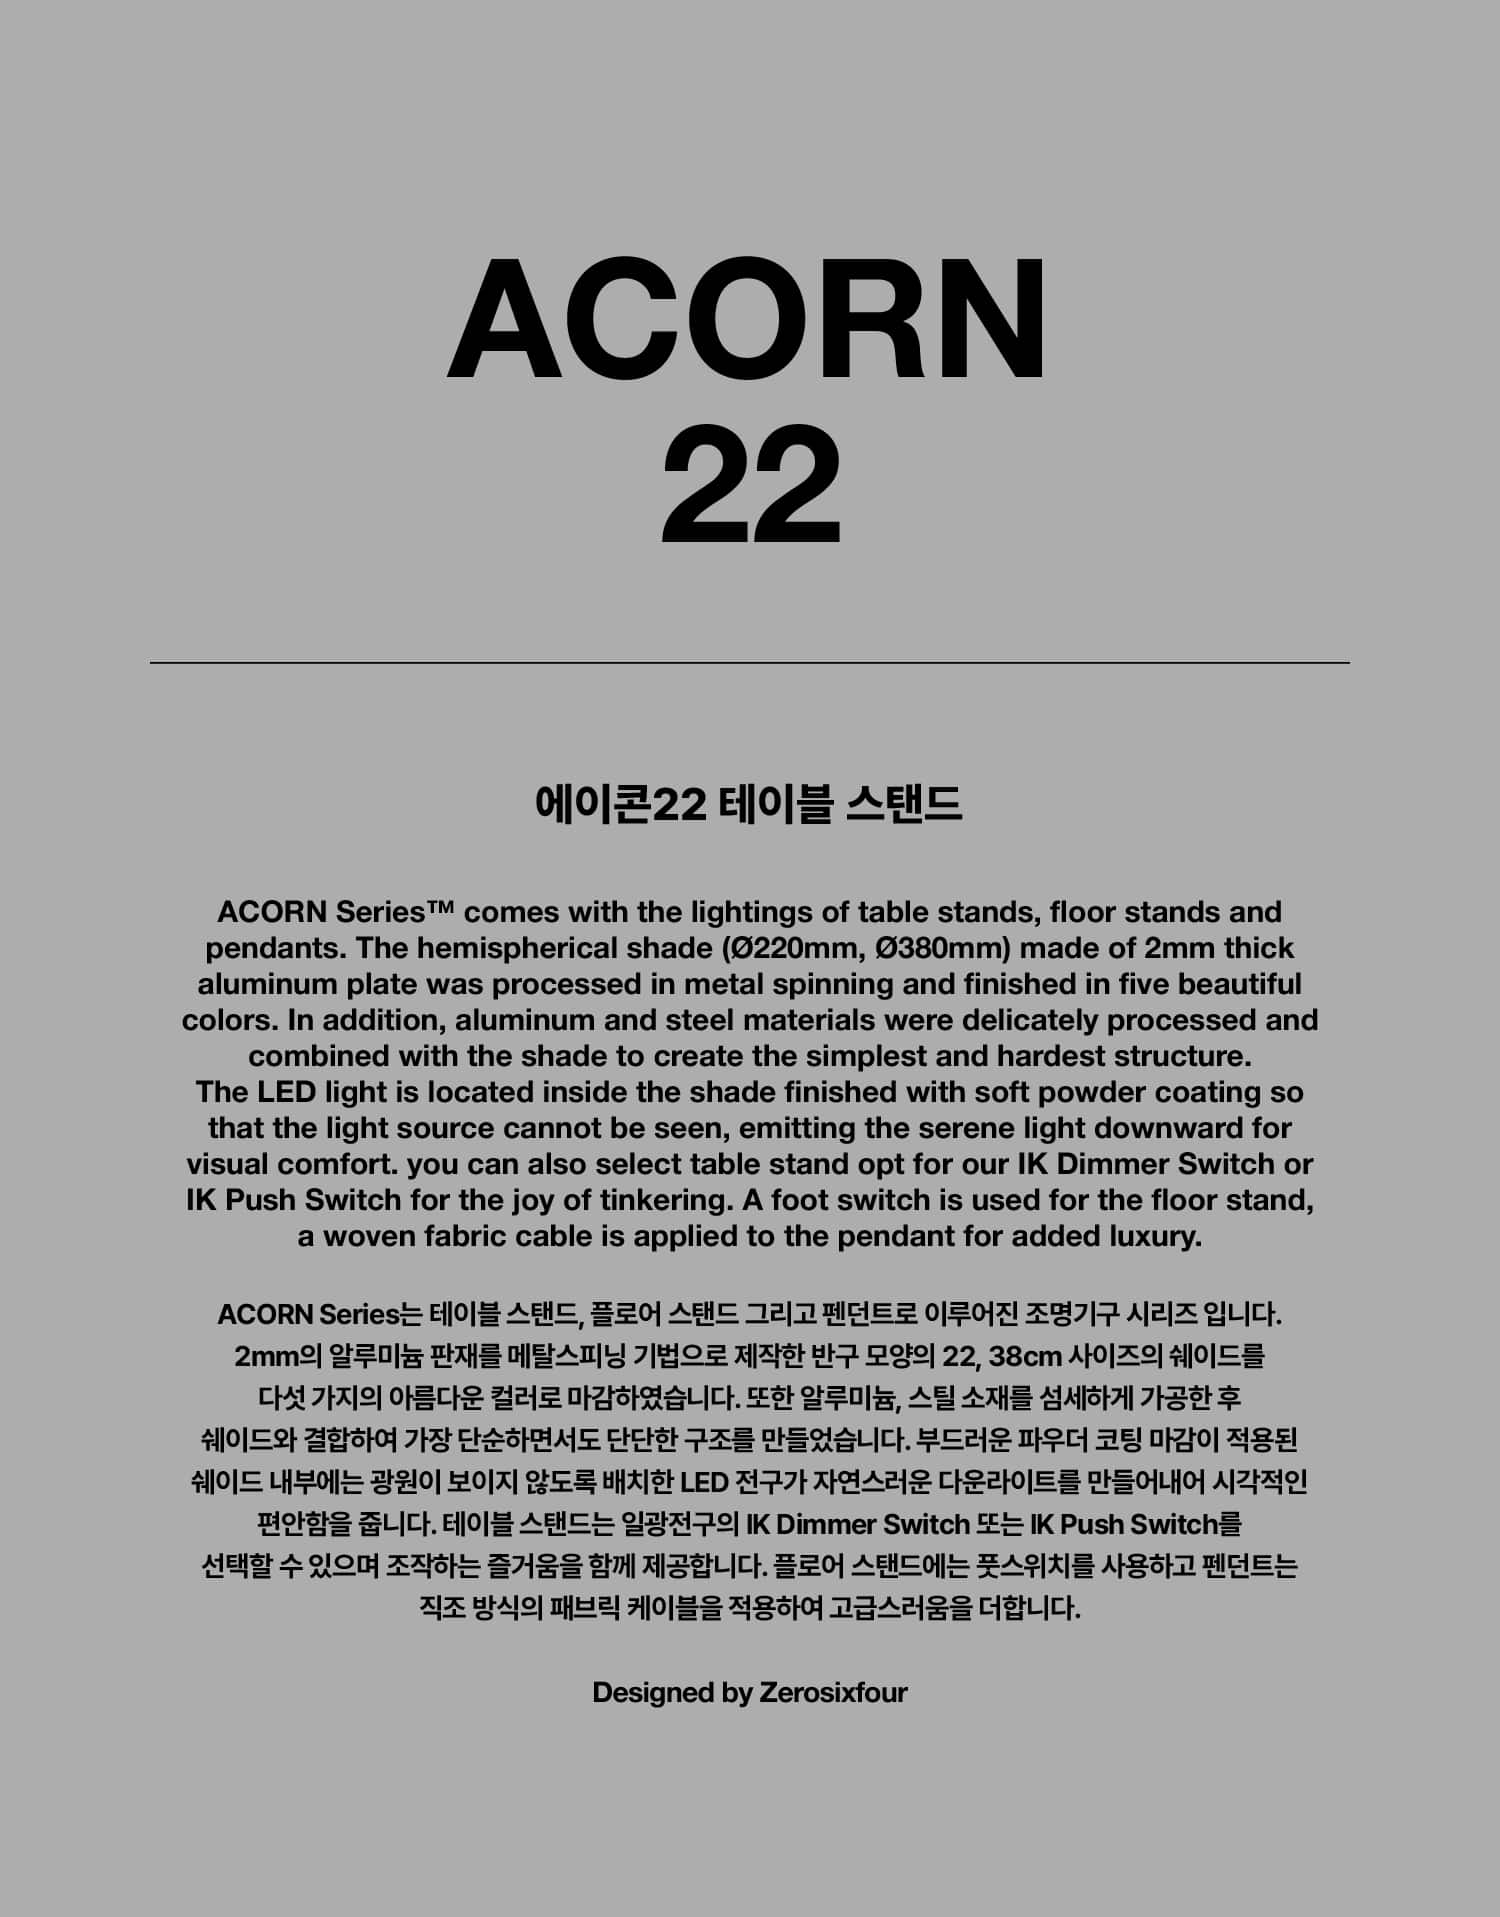  Acorn22 Stand